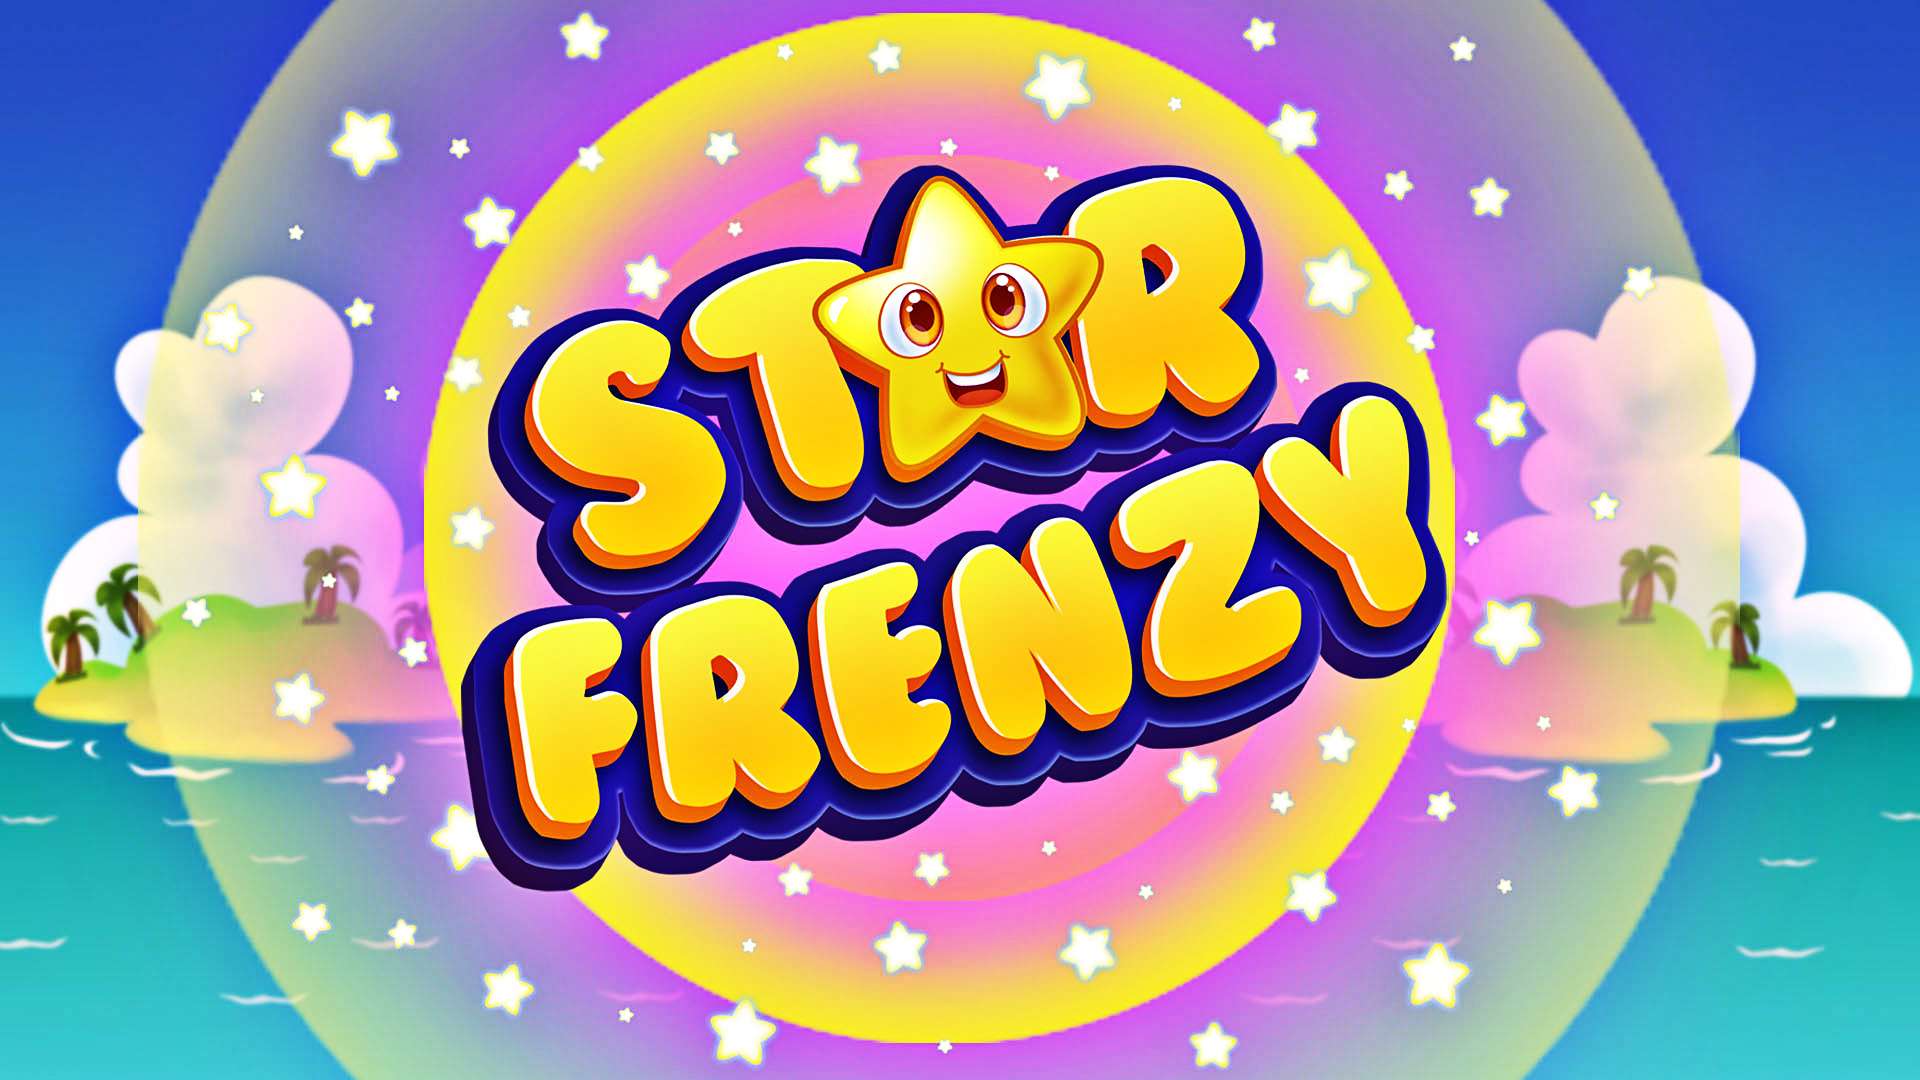 starfrenzy